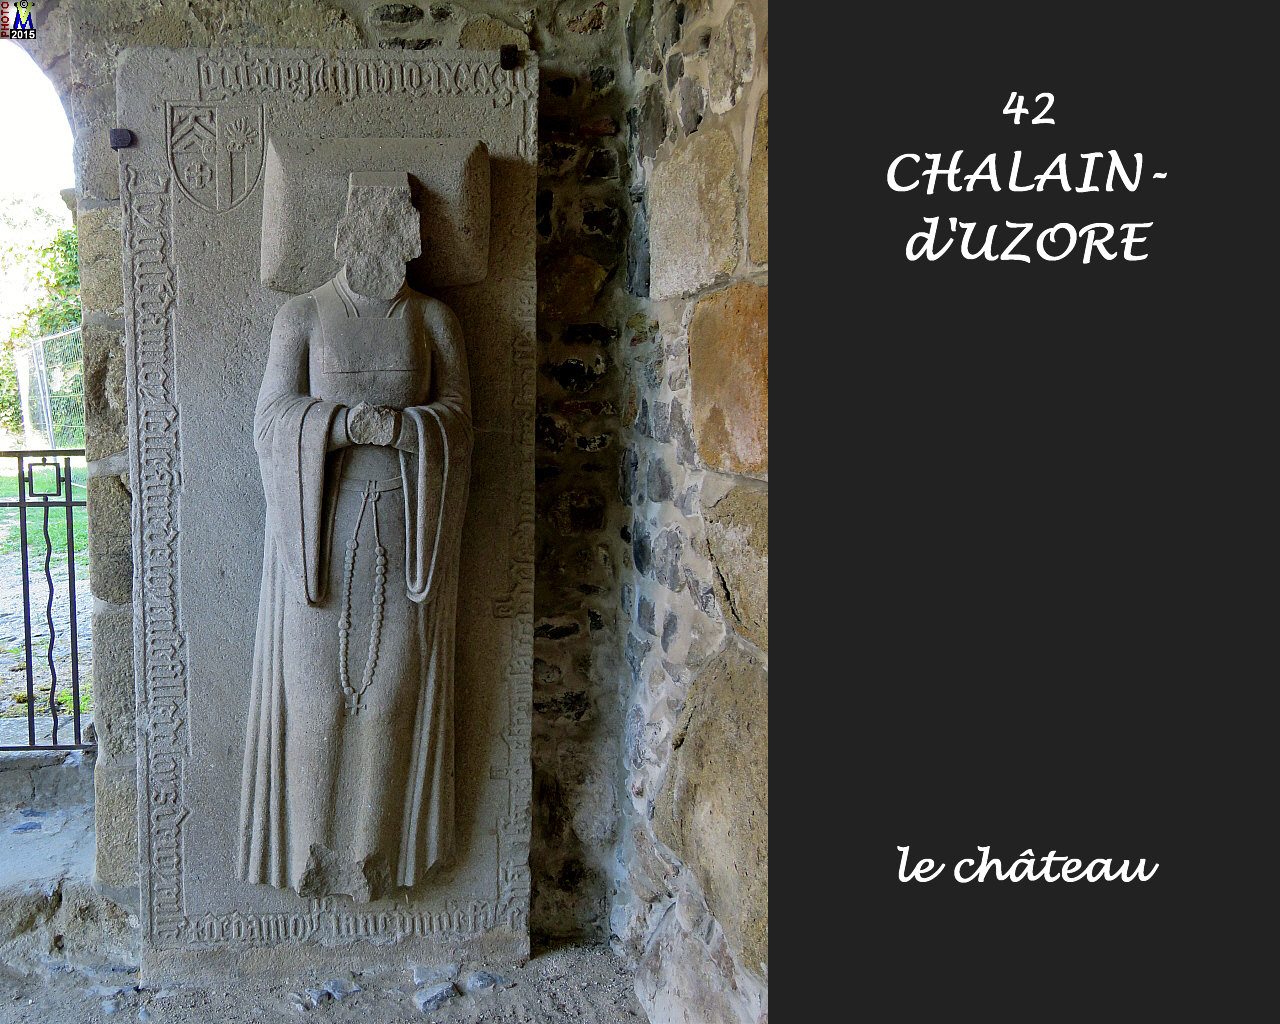 42CHALAIN-UZORE_chateau_108.jpg